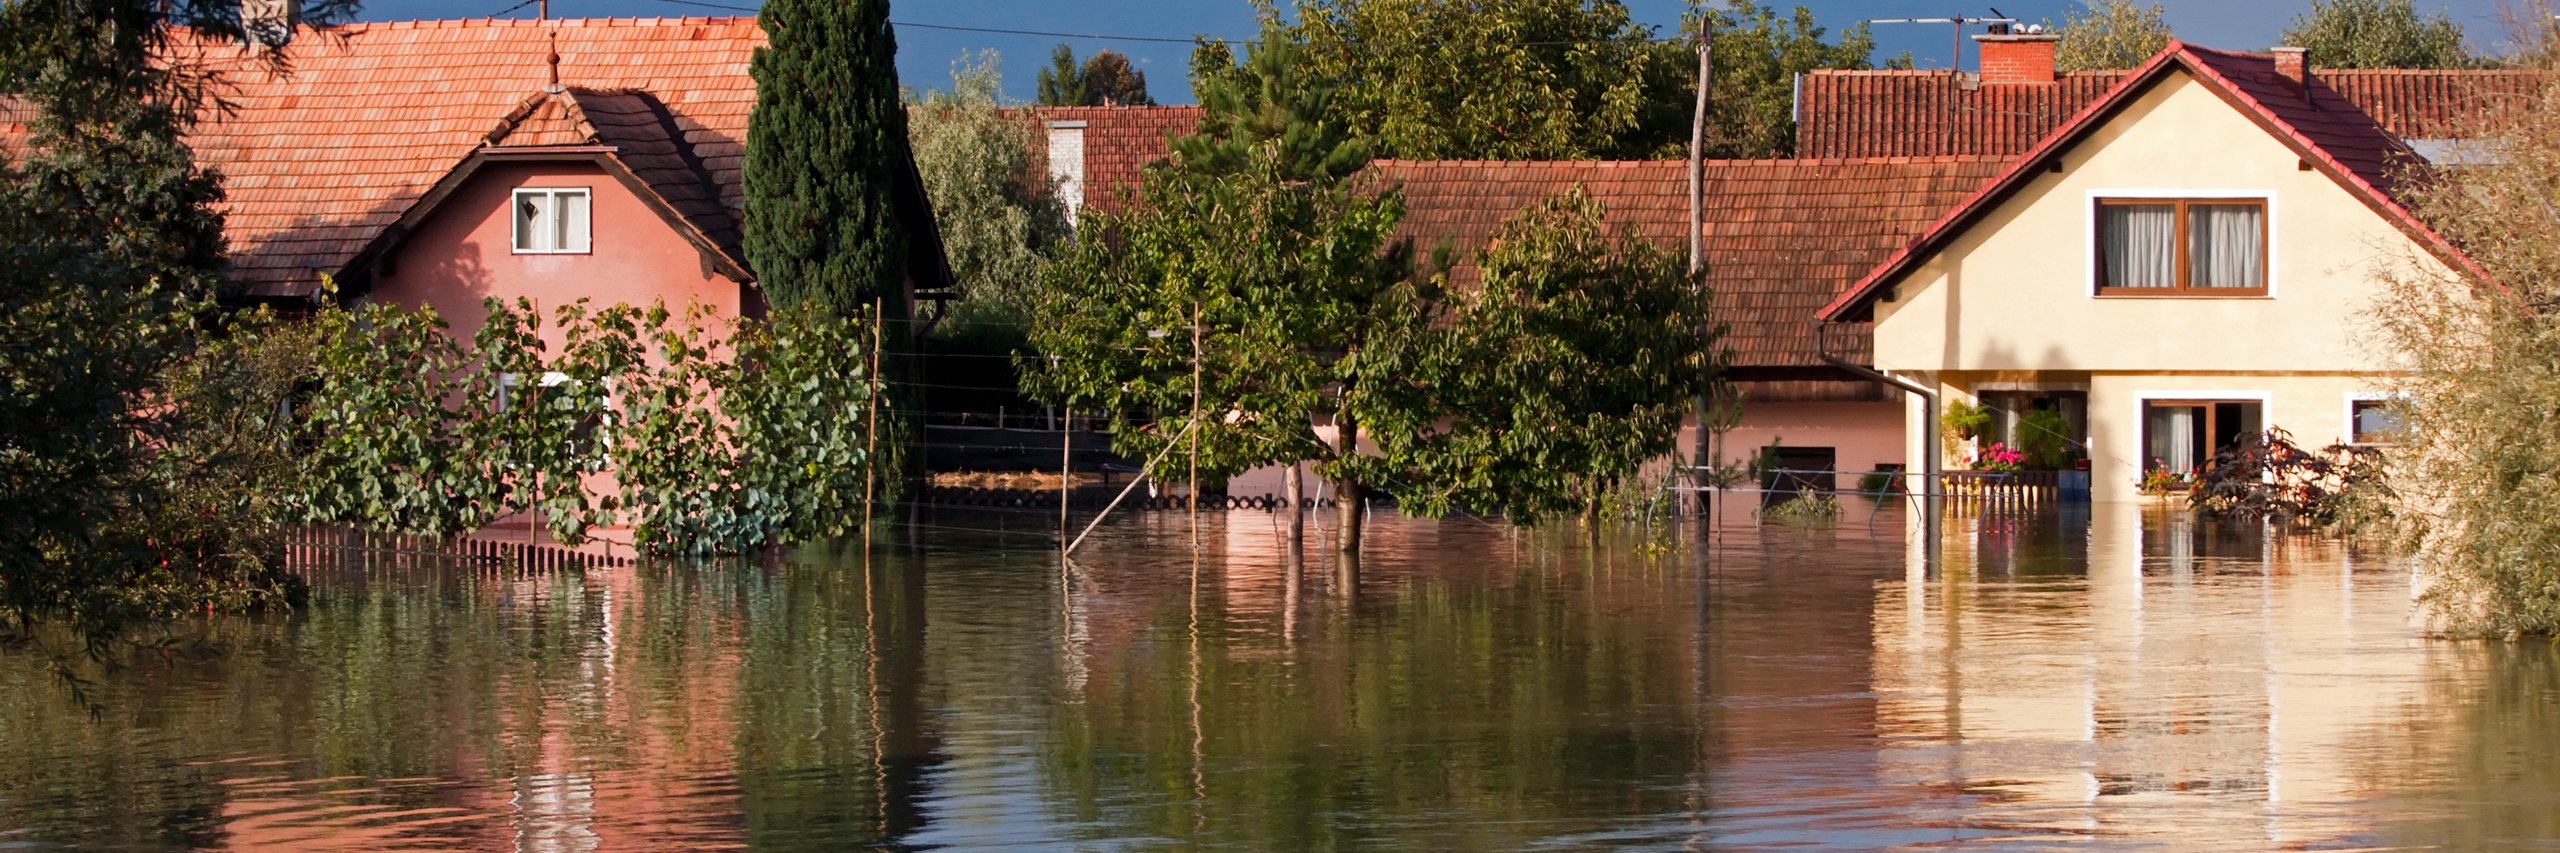 flooded house in a neighborhood